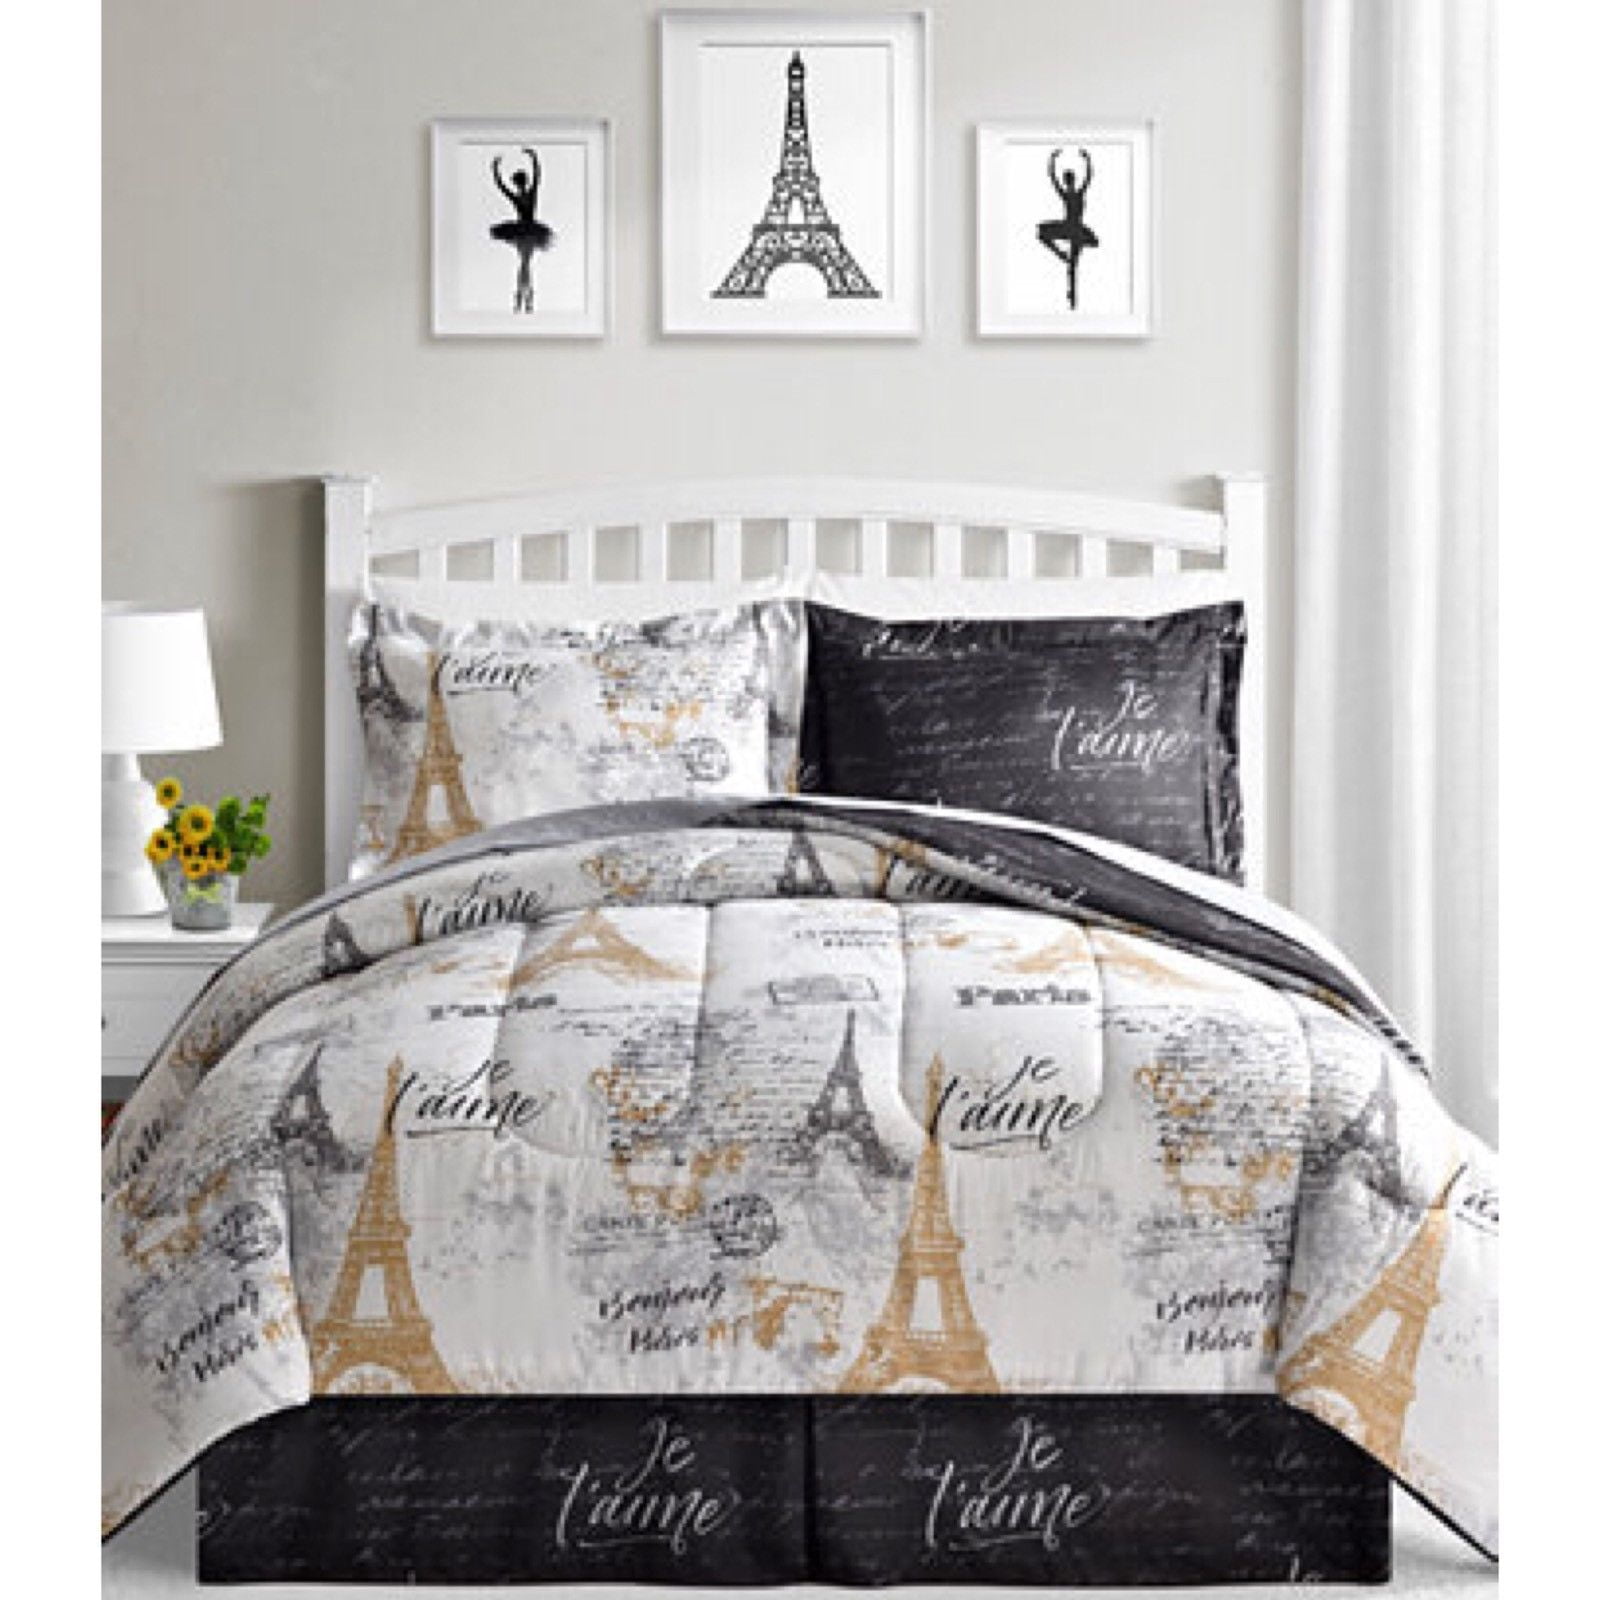 Casa Photo Real Paris Eiffel Tower 5-PCS Bed in a Bag Comforter Bedding Set 